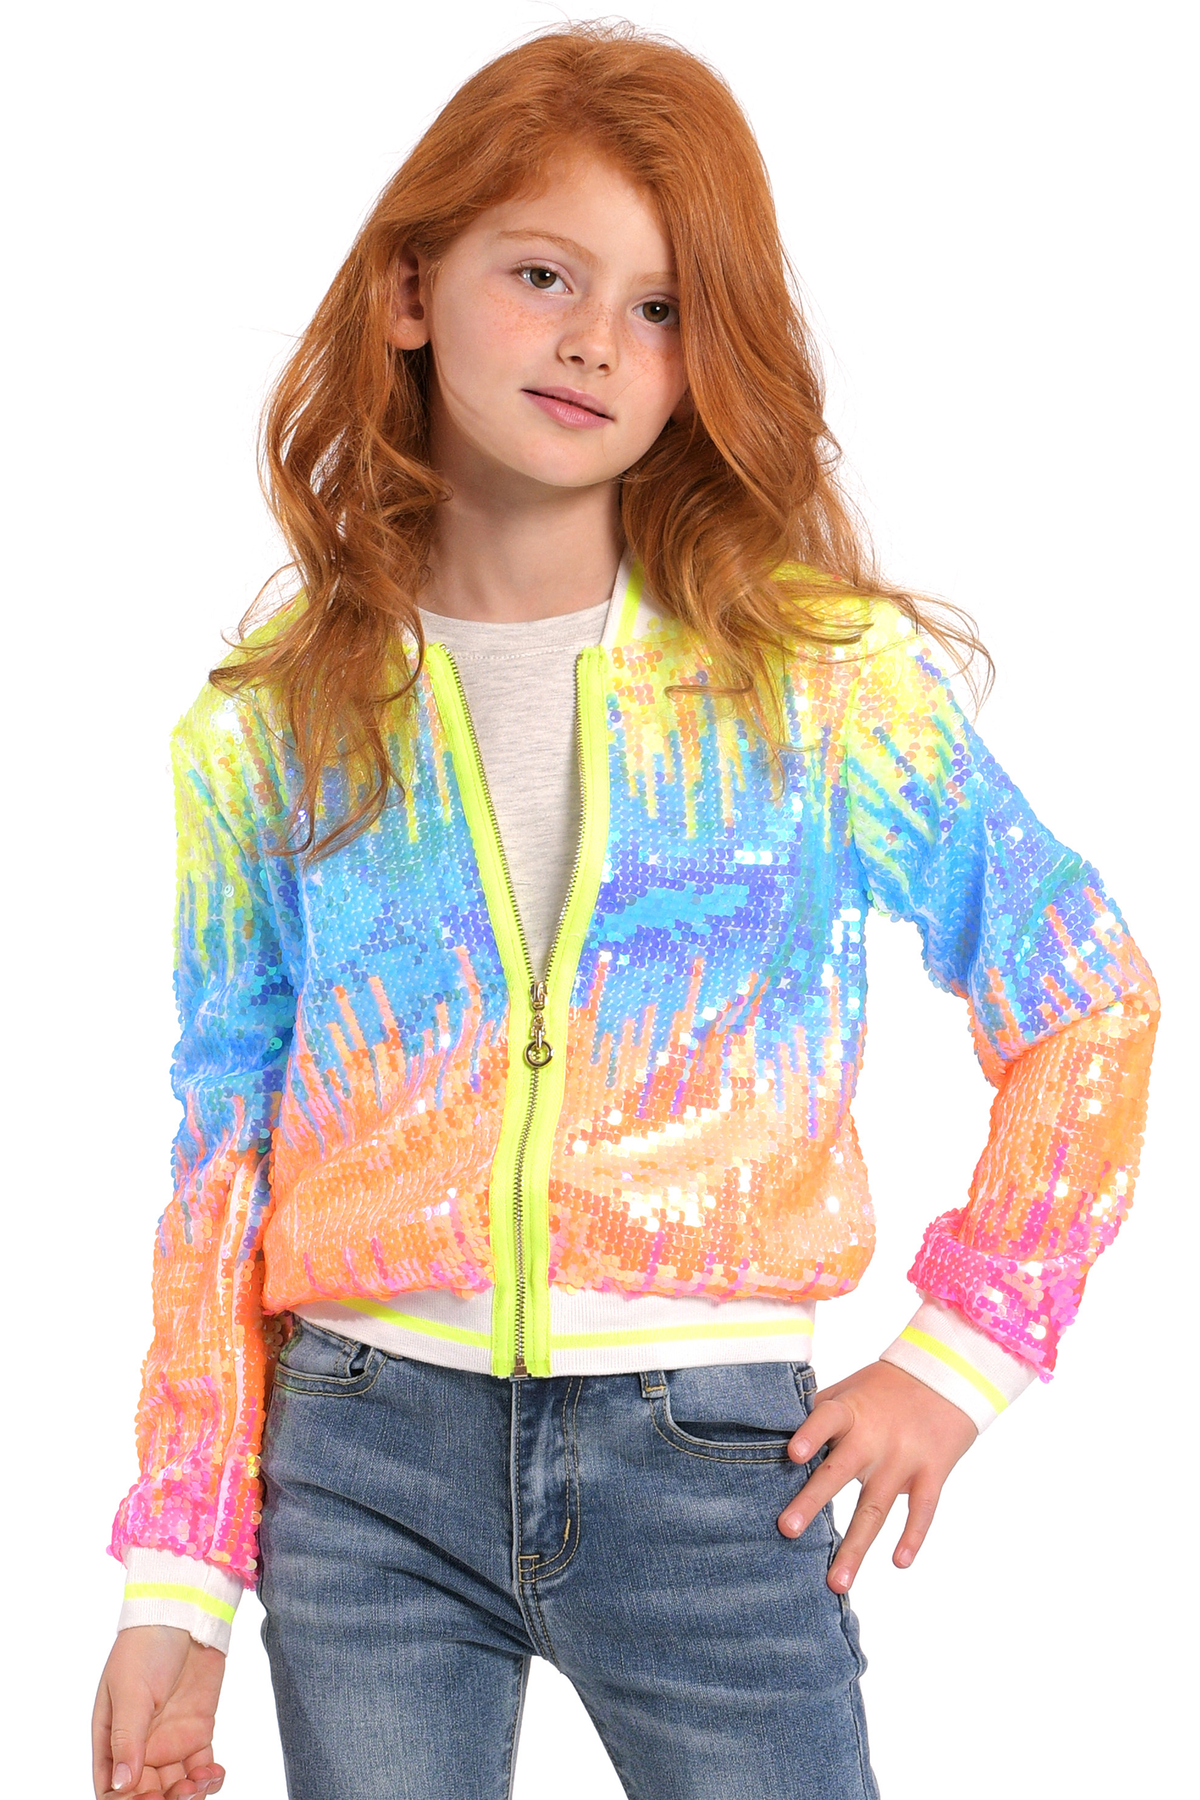 Hannah Banana  Girls Neon Color Sequin Fashion Bomber Jacket –  myhannahbanana